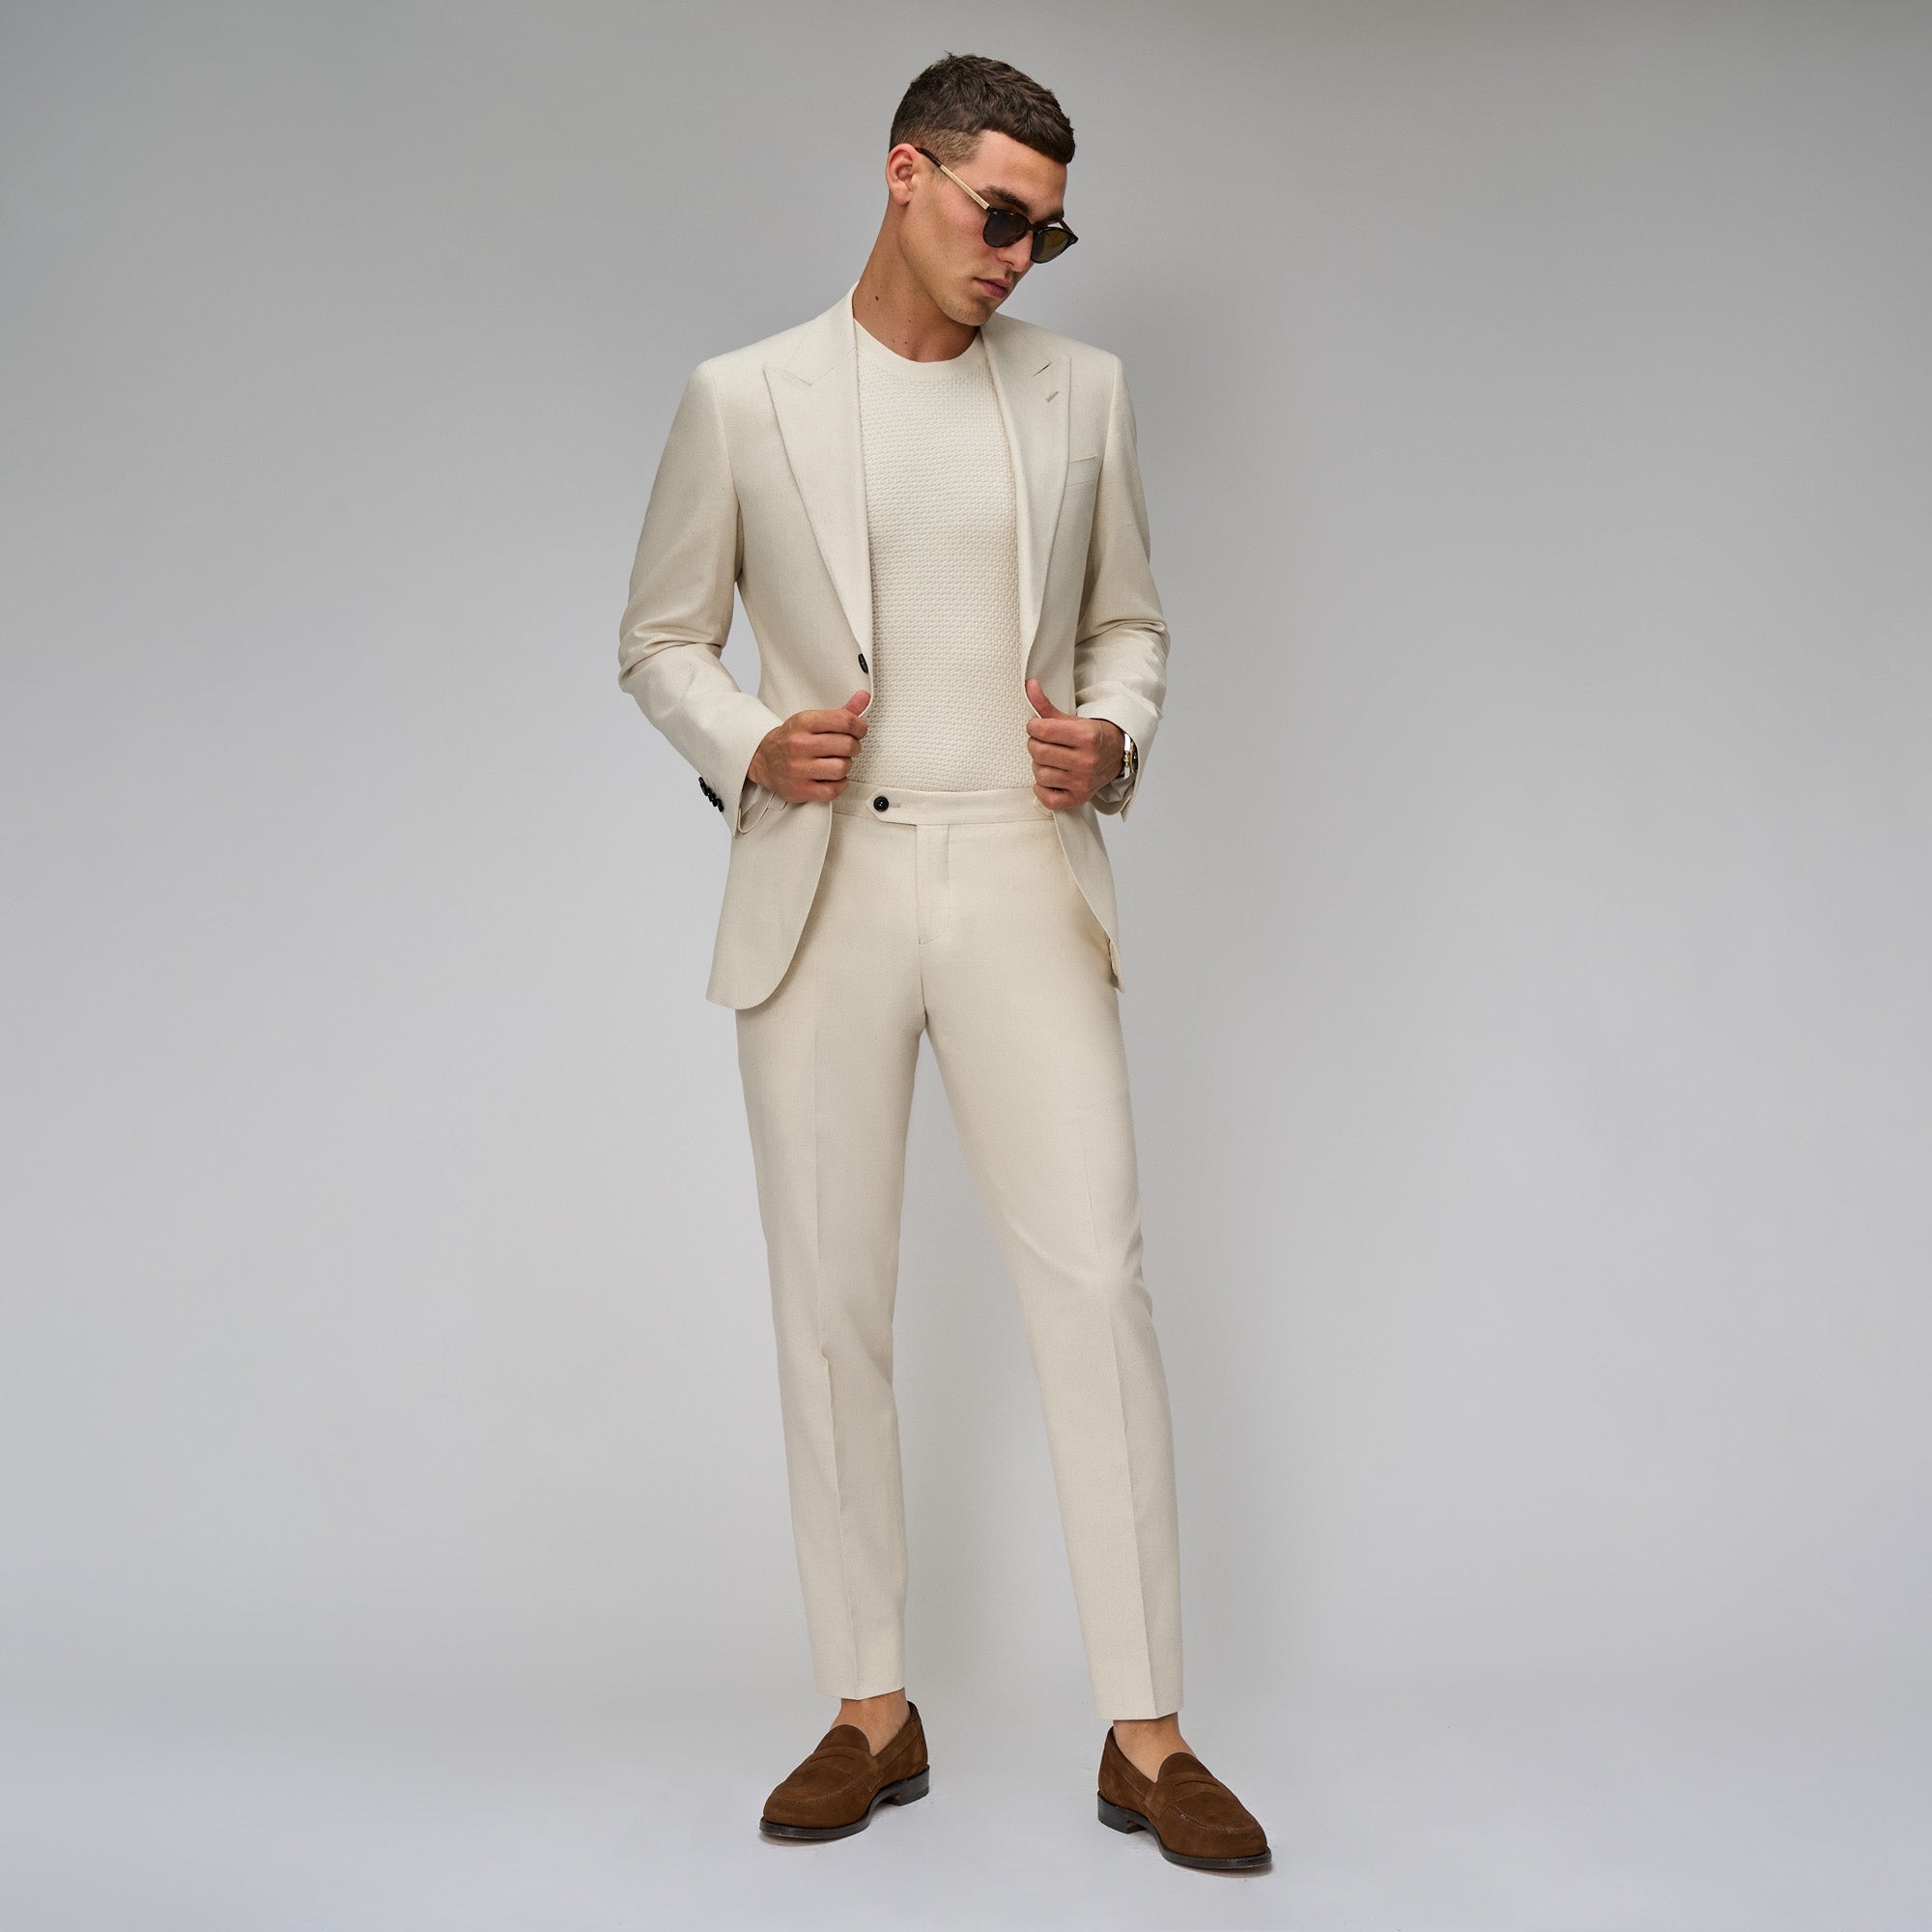 Linen Cotton Suit in Oatmeal, Tailored Linen Suits